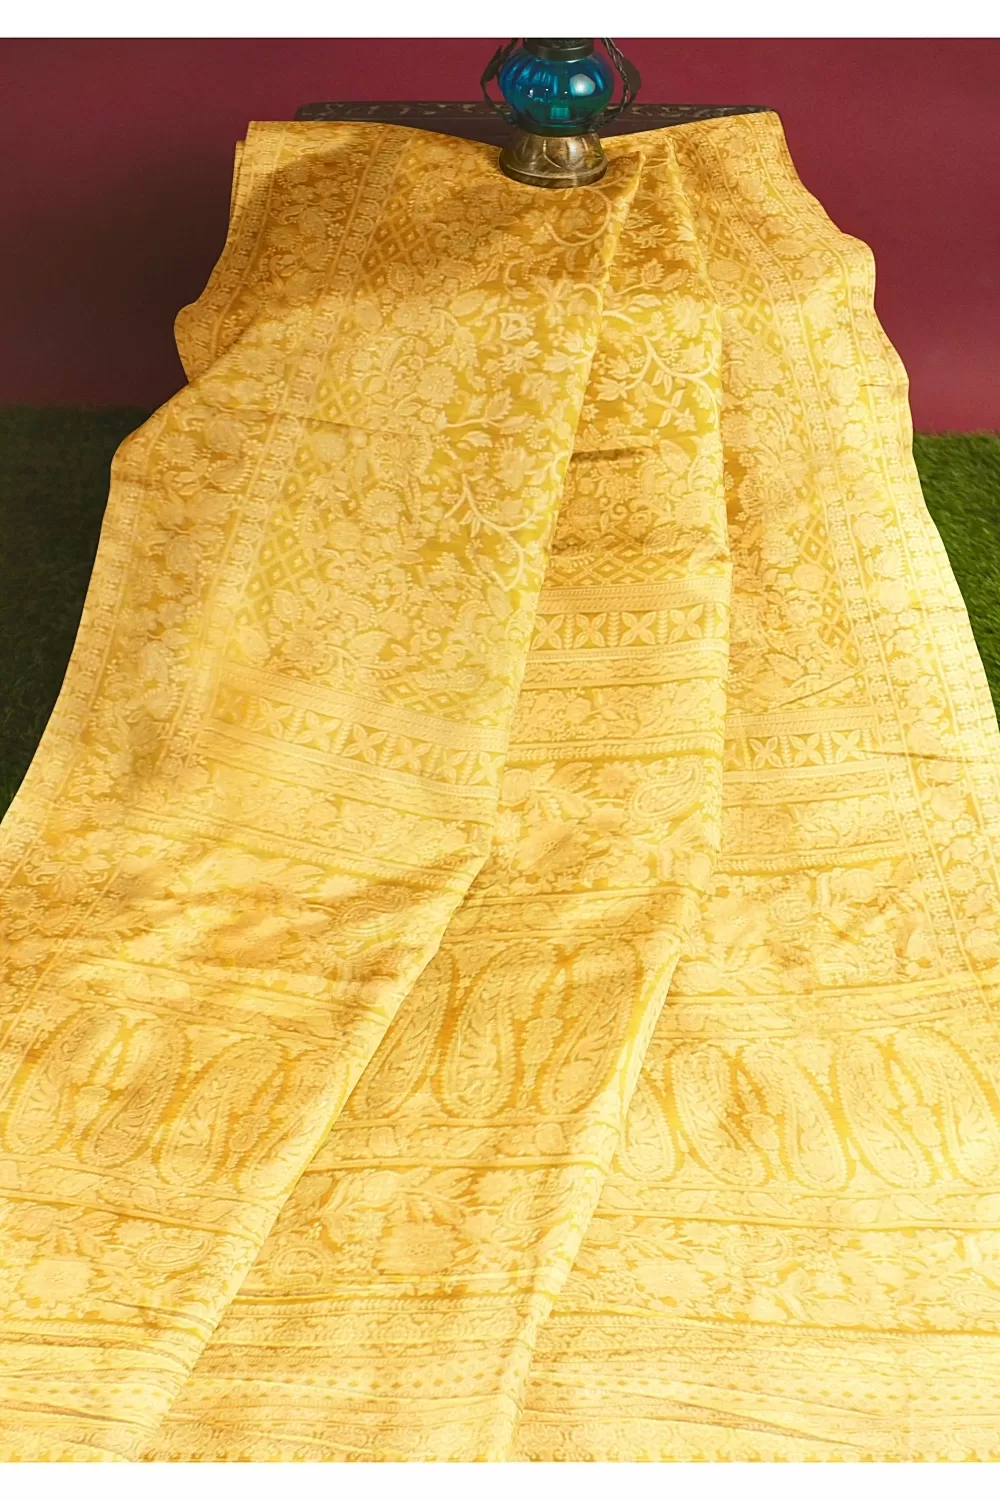 Musterd Yellow Colour Soft Silk Saree